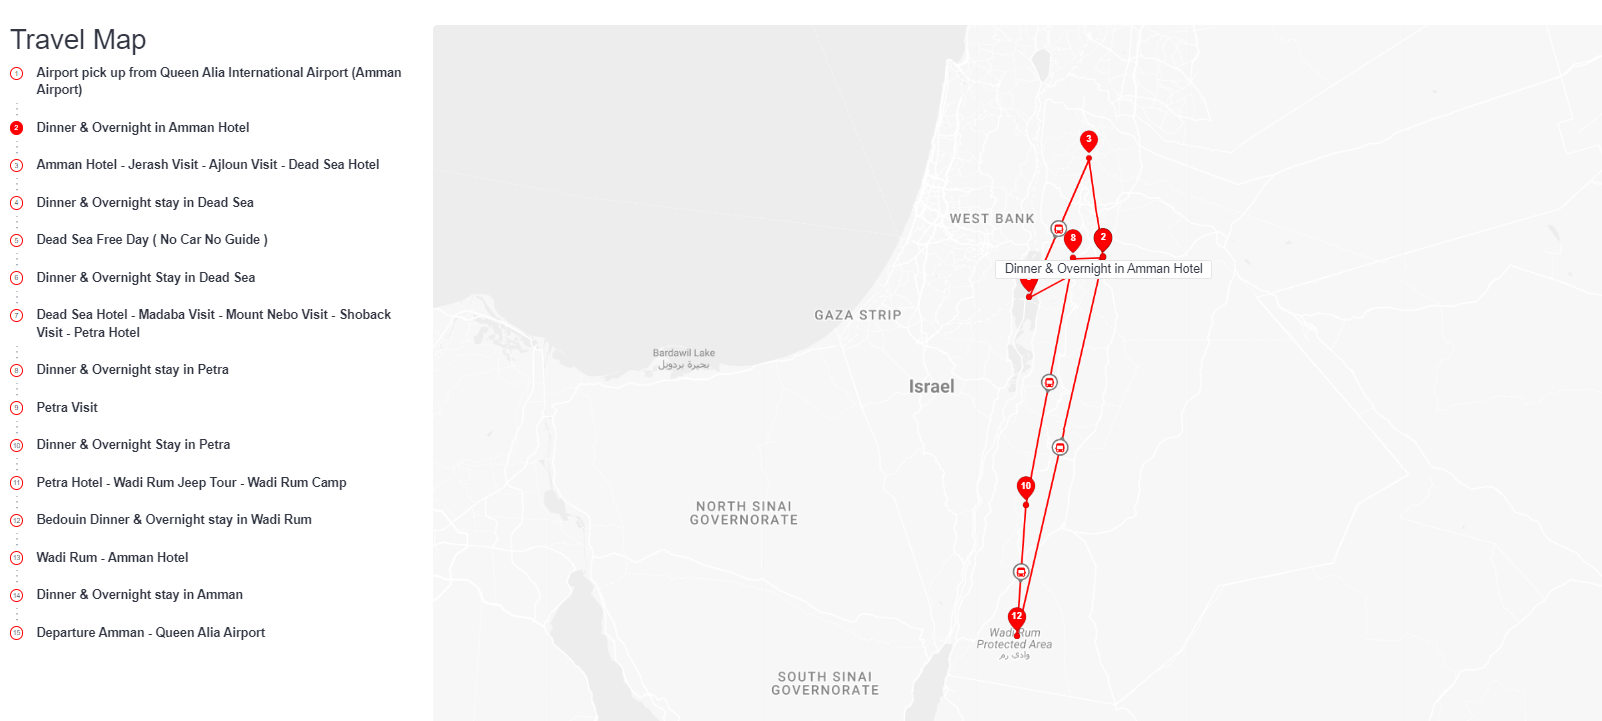 tourhub | Travco Jordan | Adventures of Jordan with 3* accommodation | Tour Map